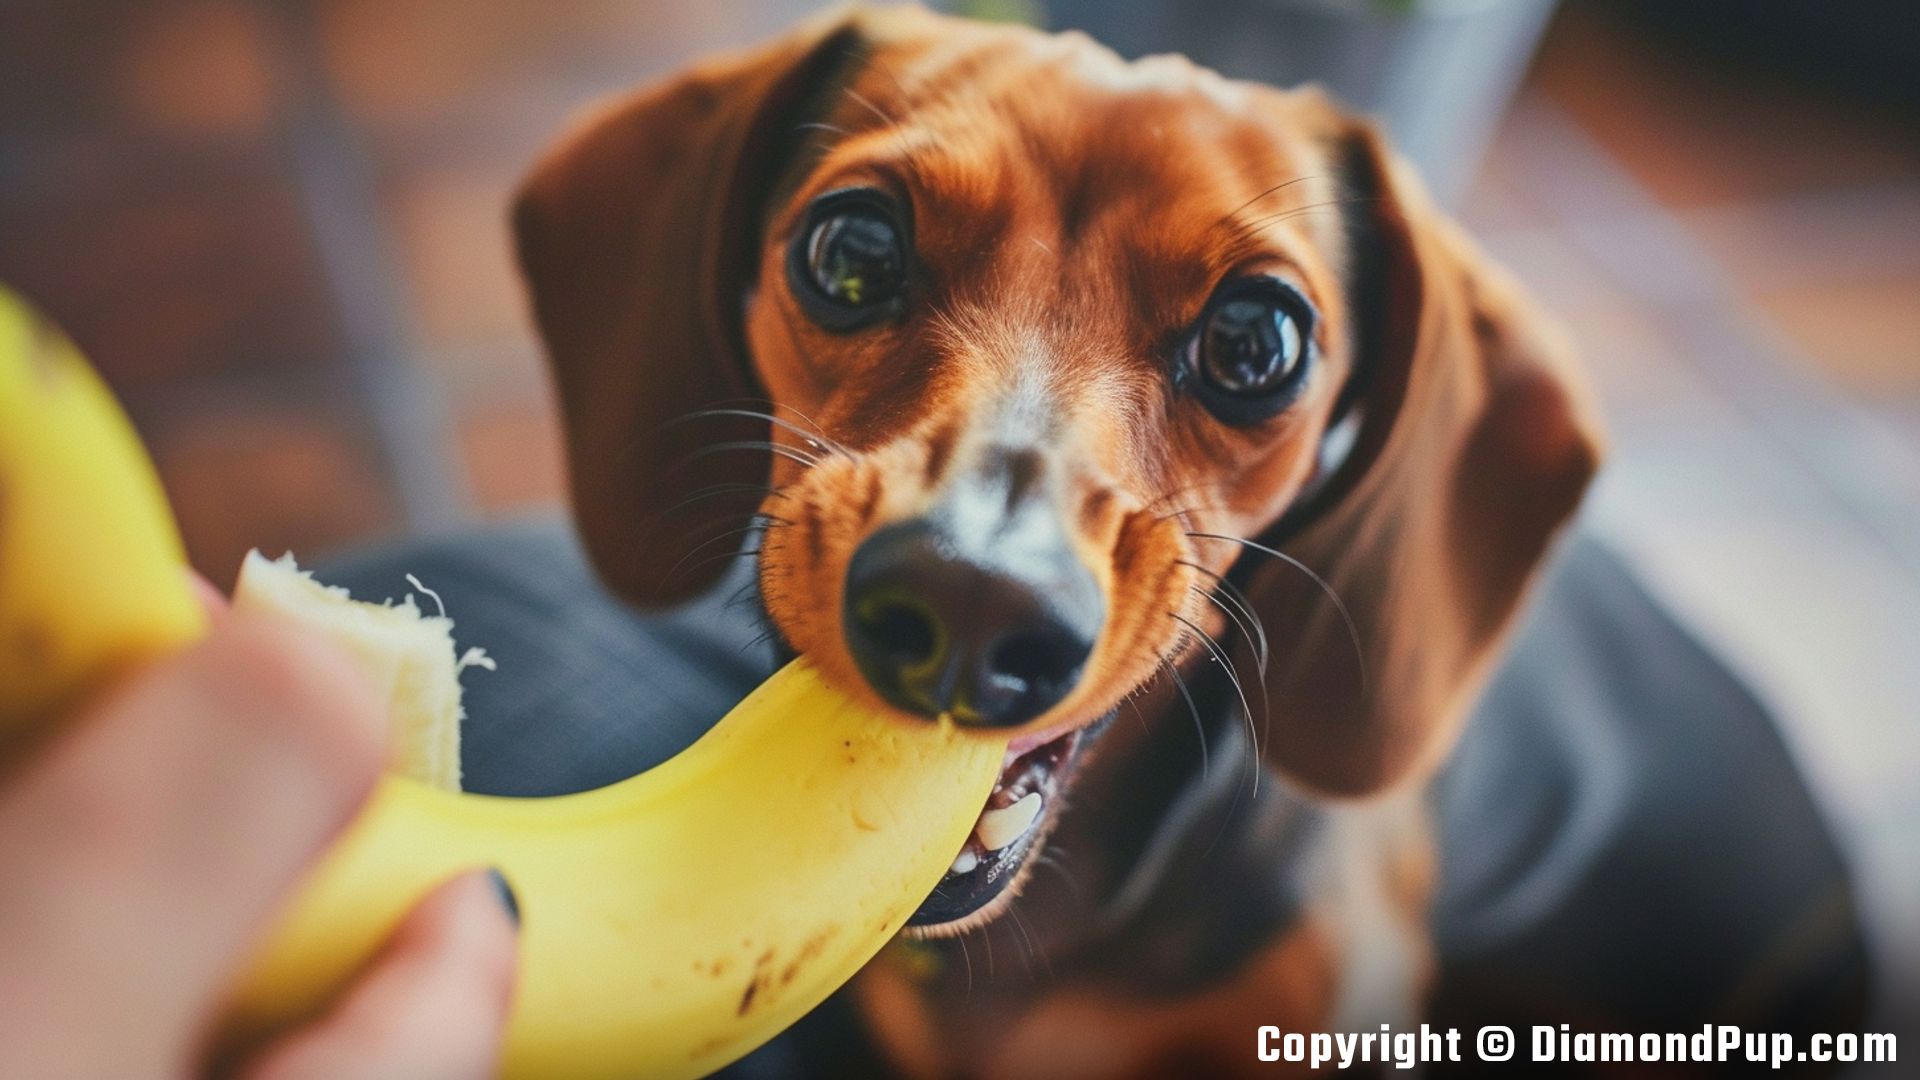 Photo of Dachshund Snacking on Banana